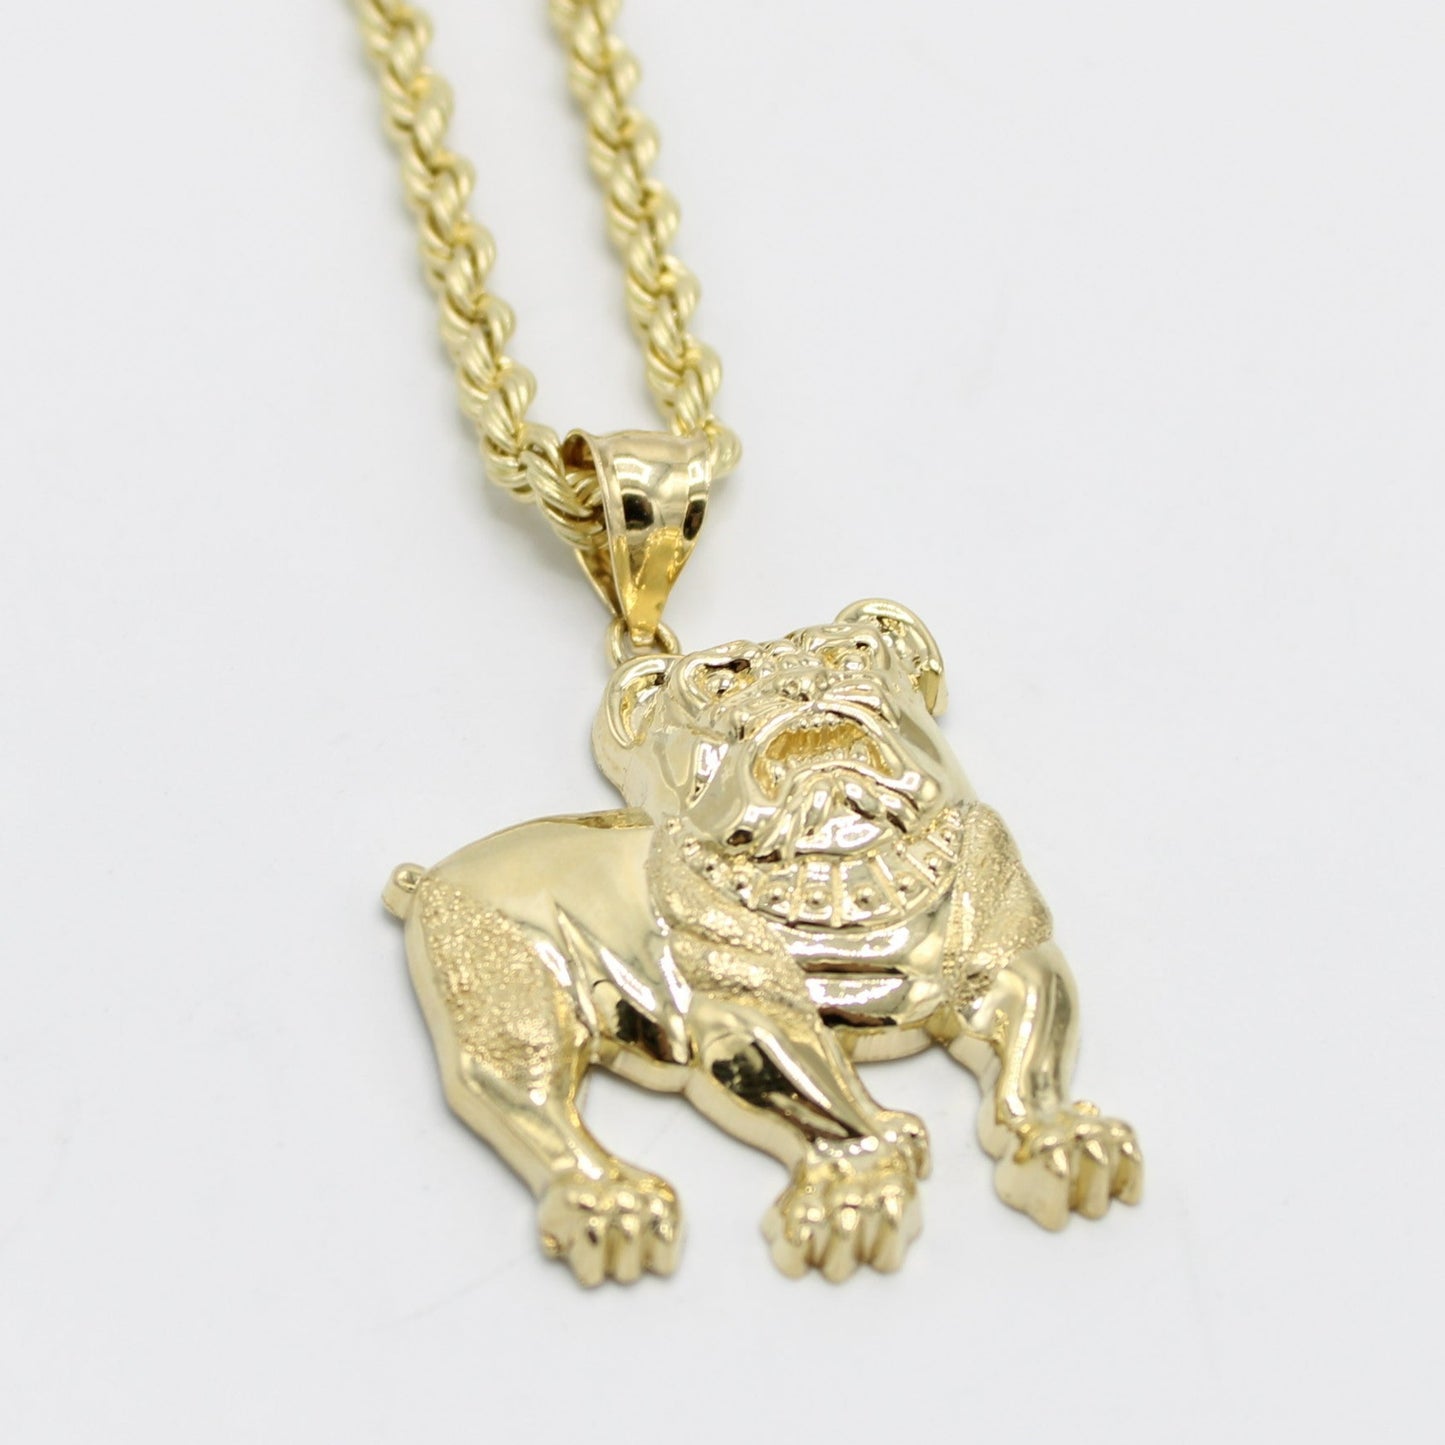 14K Bulldog Pendant with Rope Chain Yellow Gold